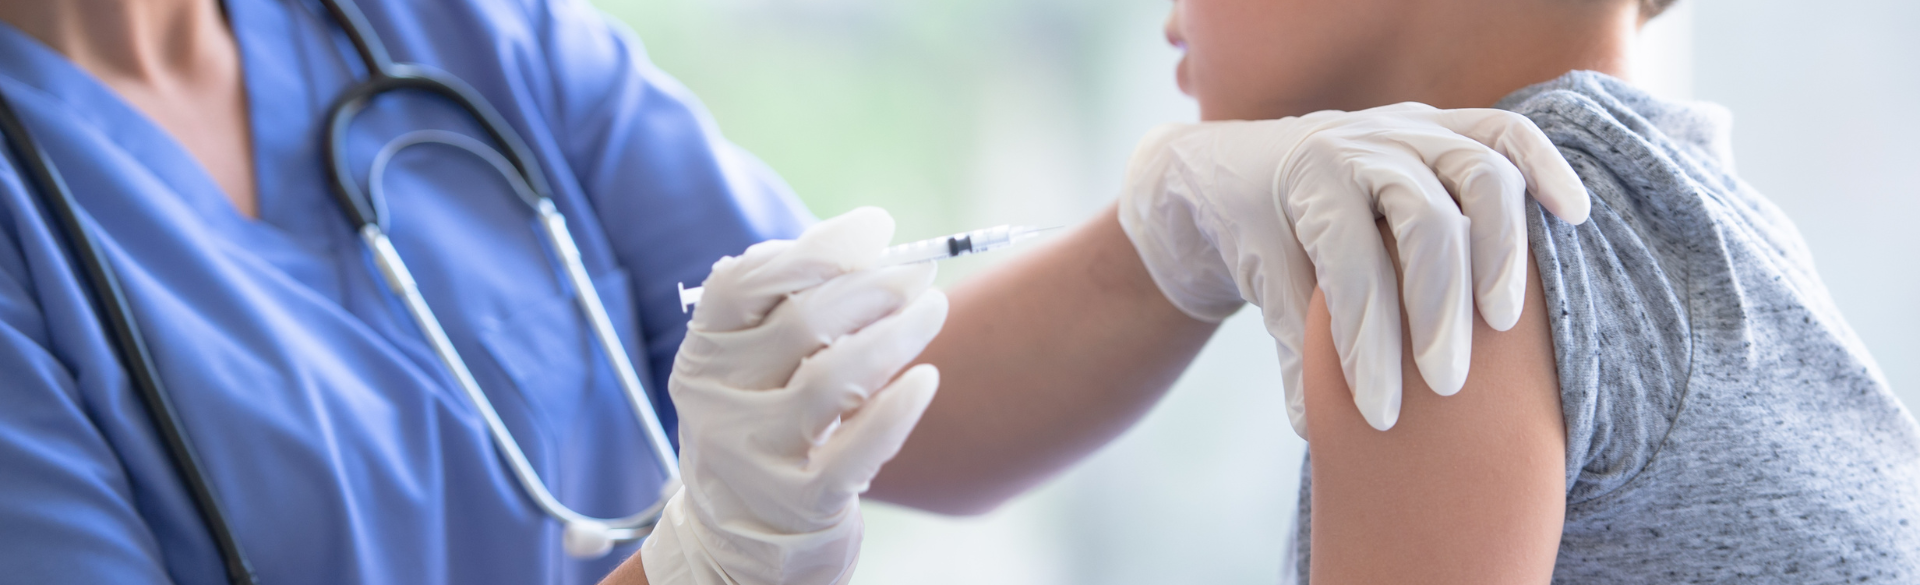 Child getting vaccine shot